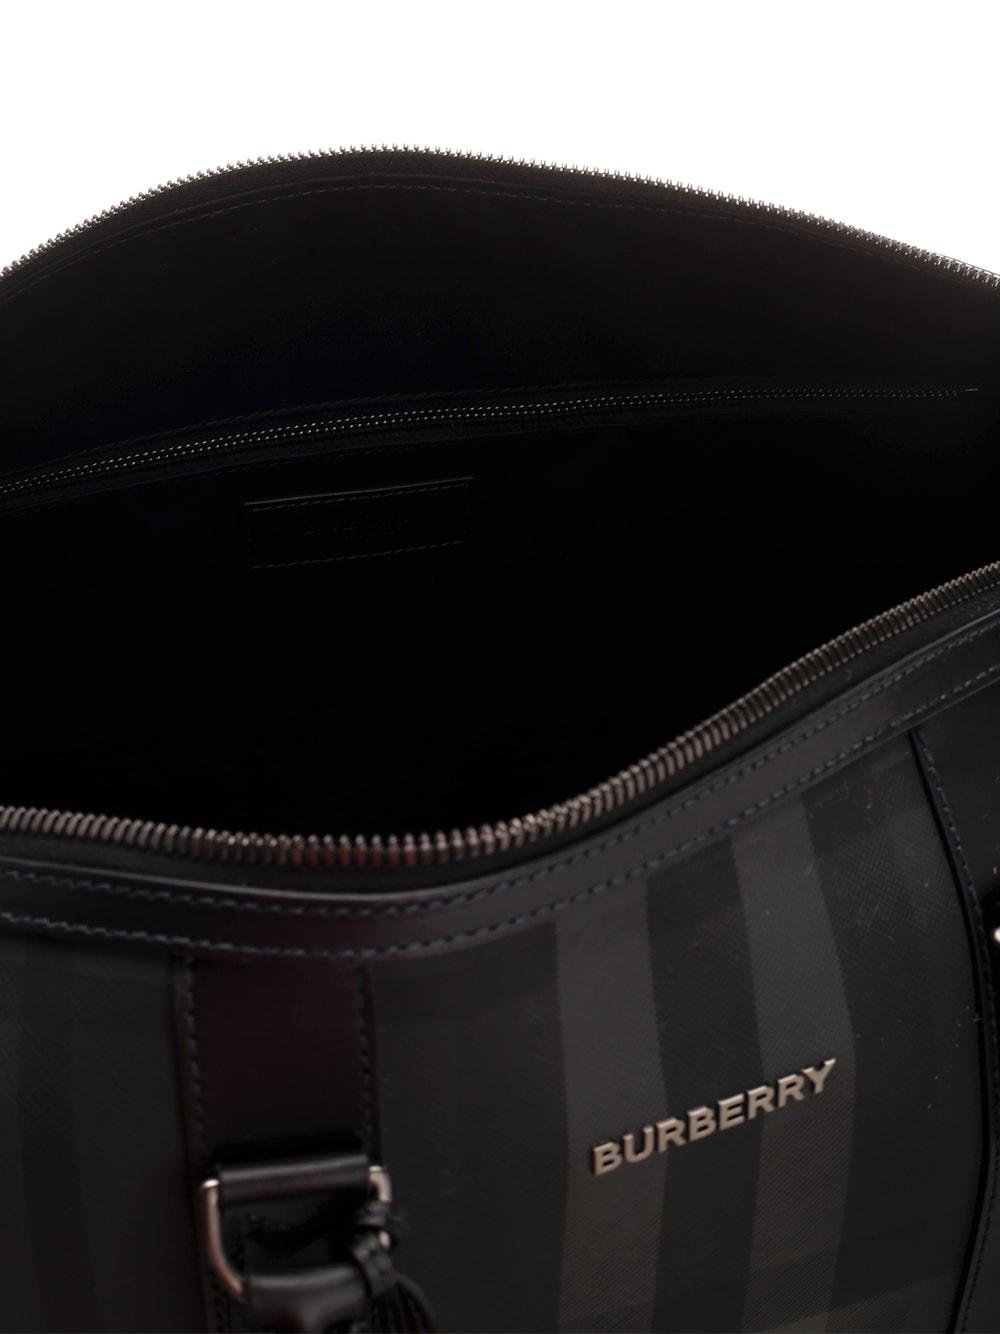 Boston Burberry Check Duffel Bag in Grey - Burberry